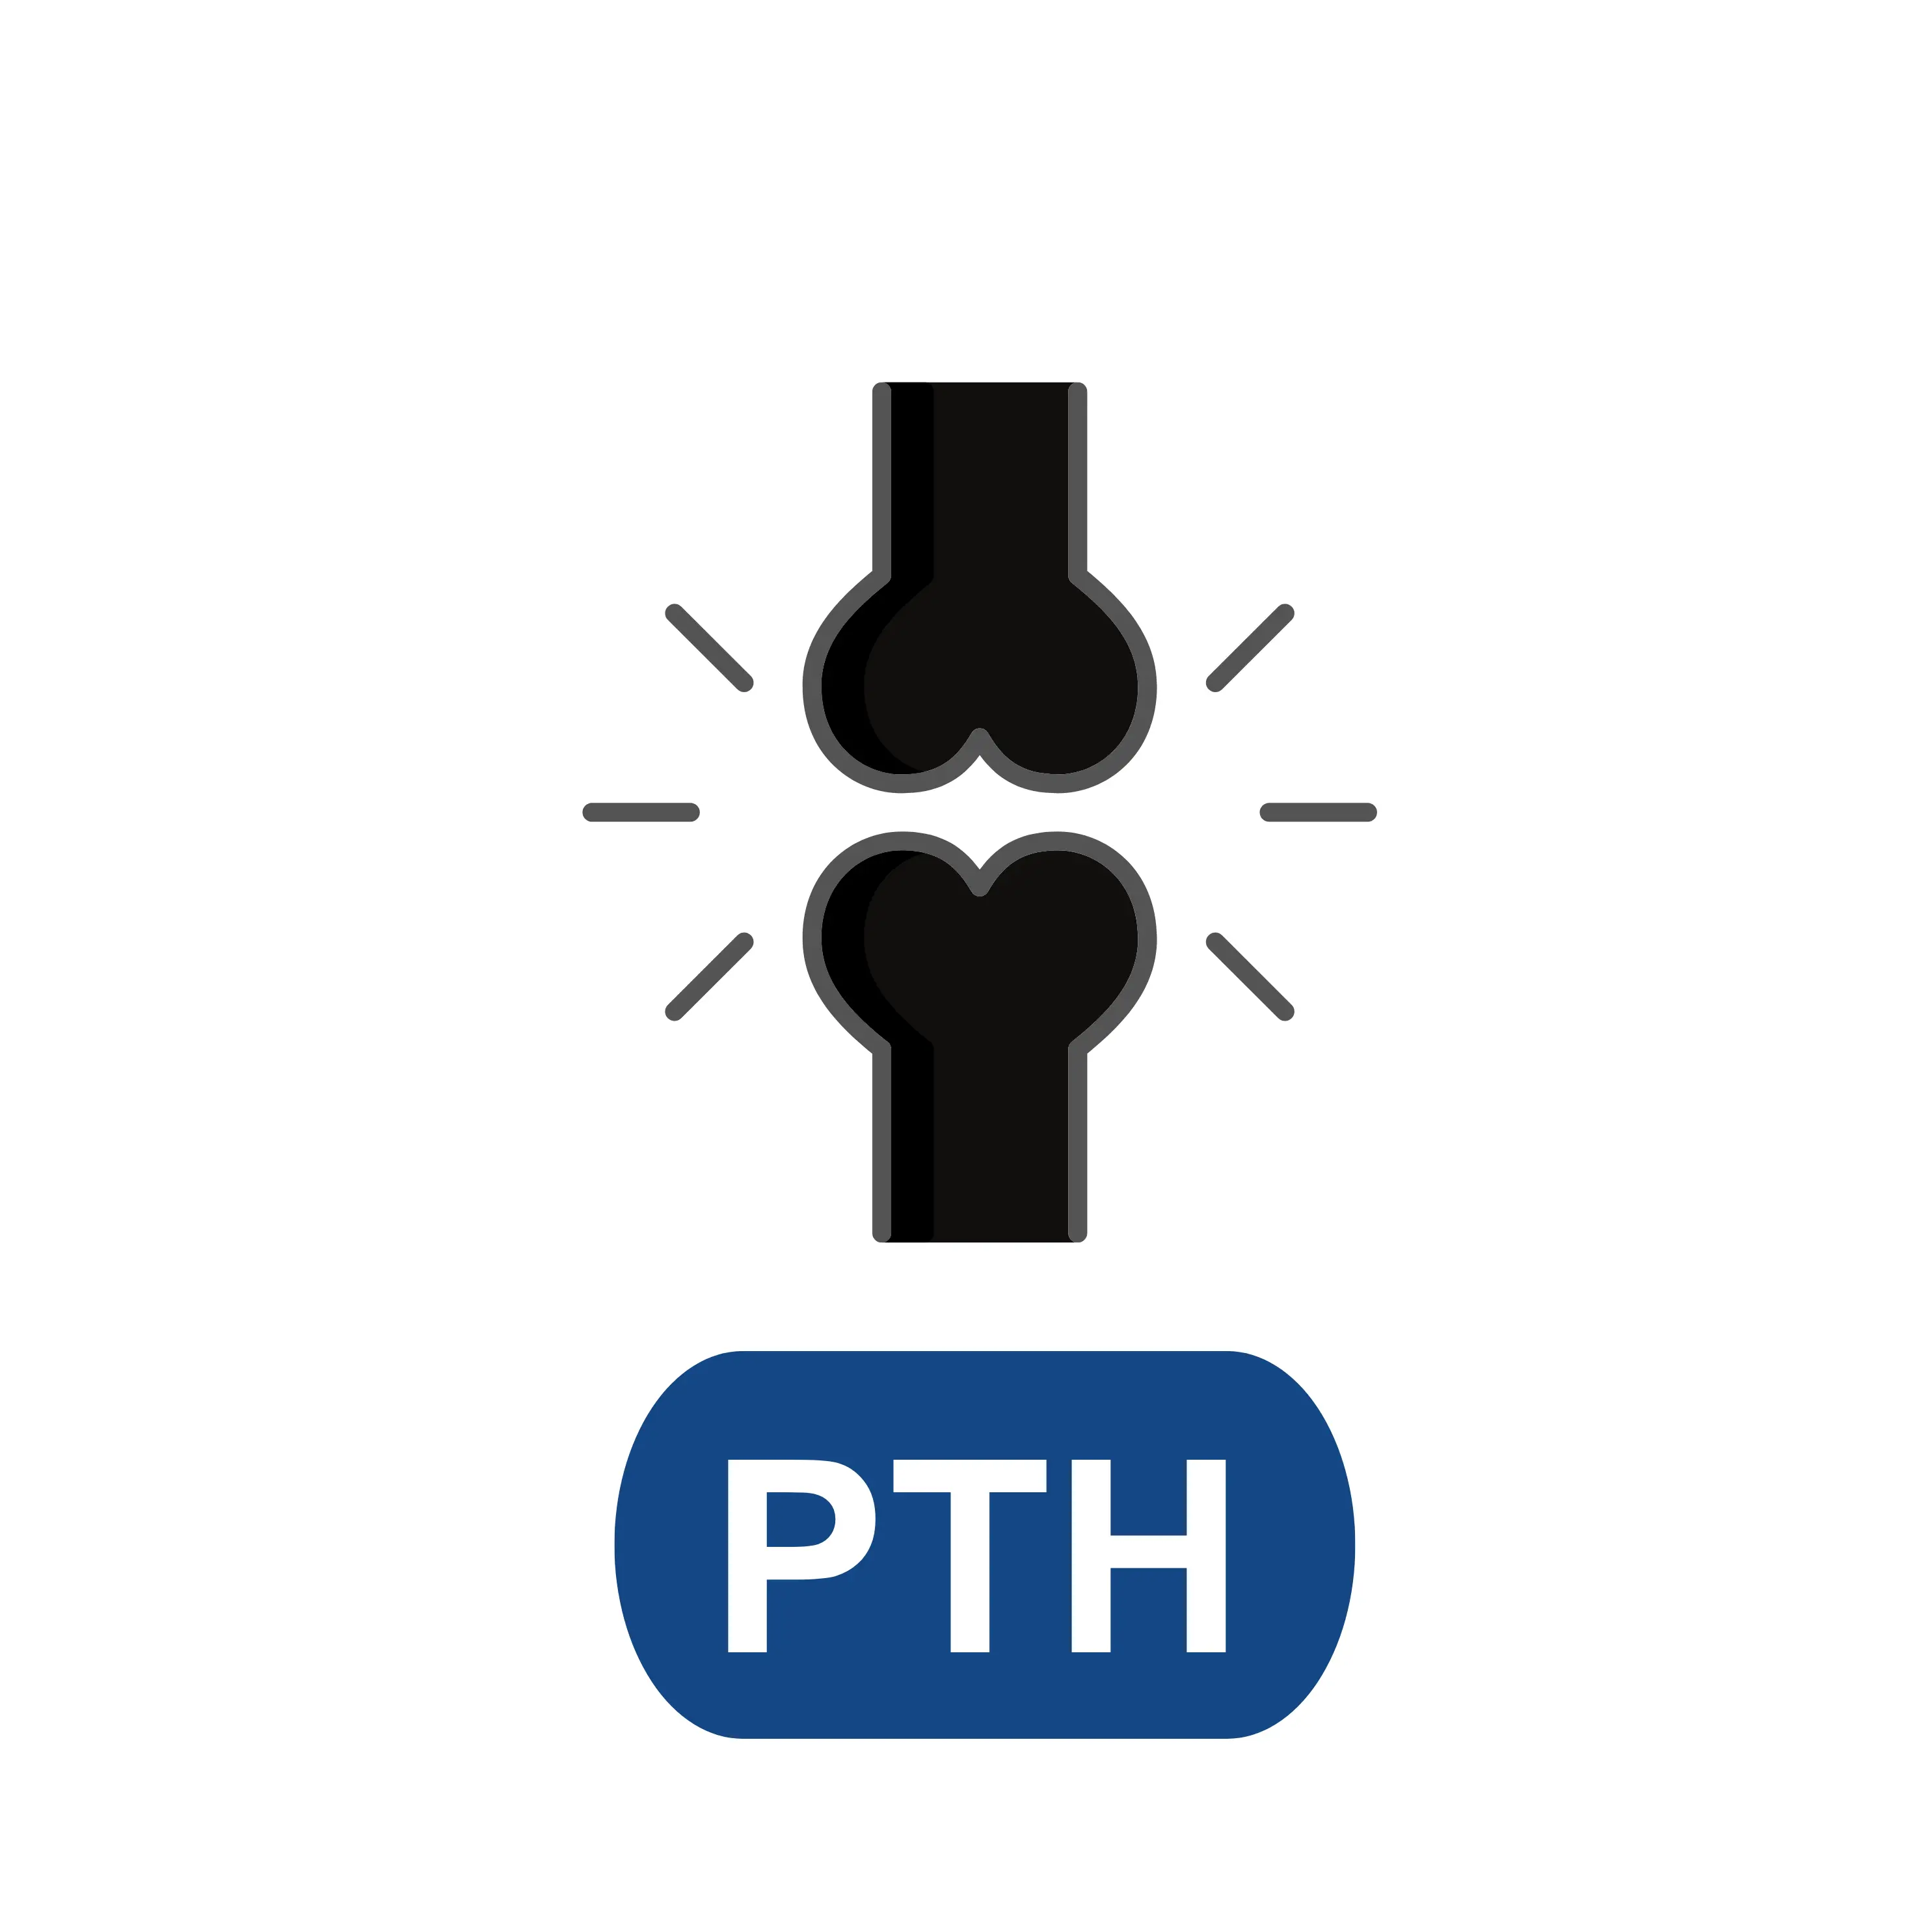 Parathyroid Hormone (PTH)